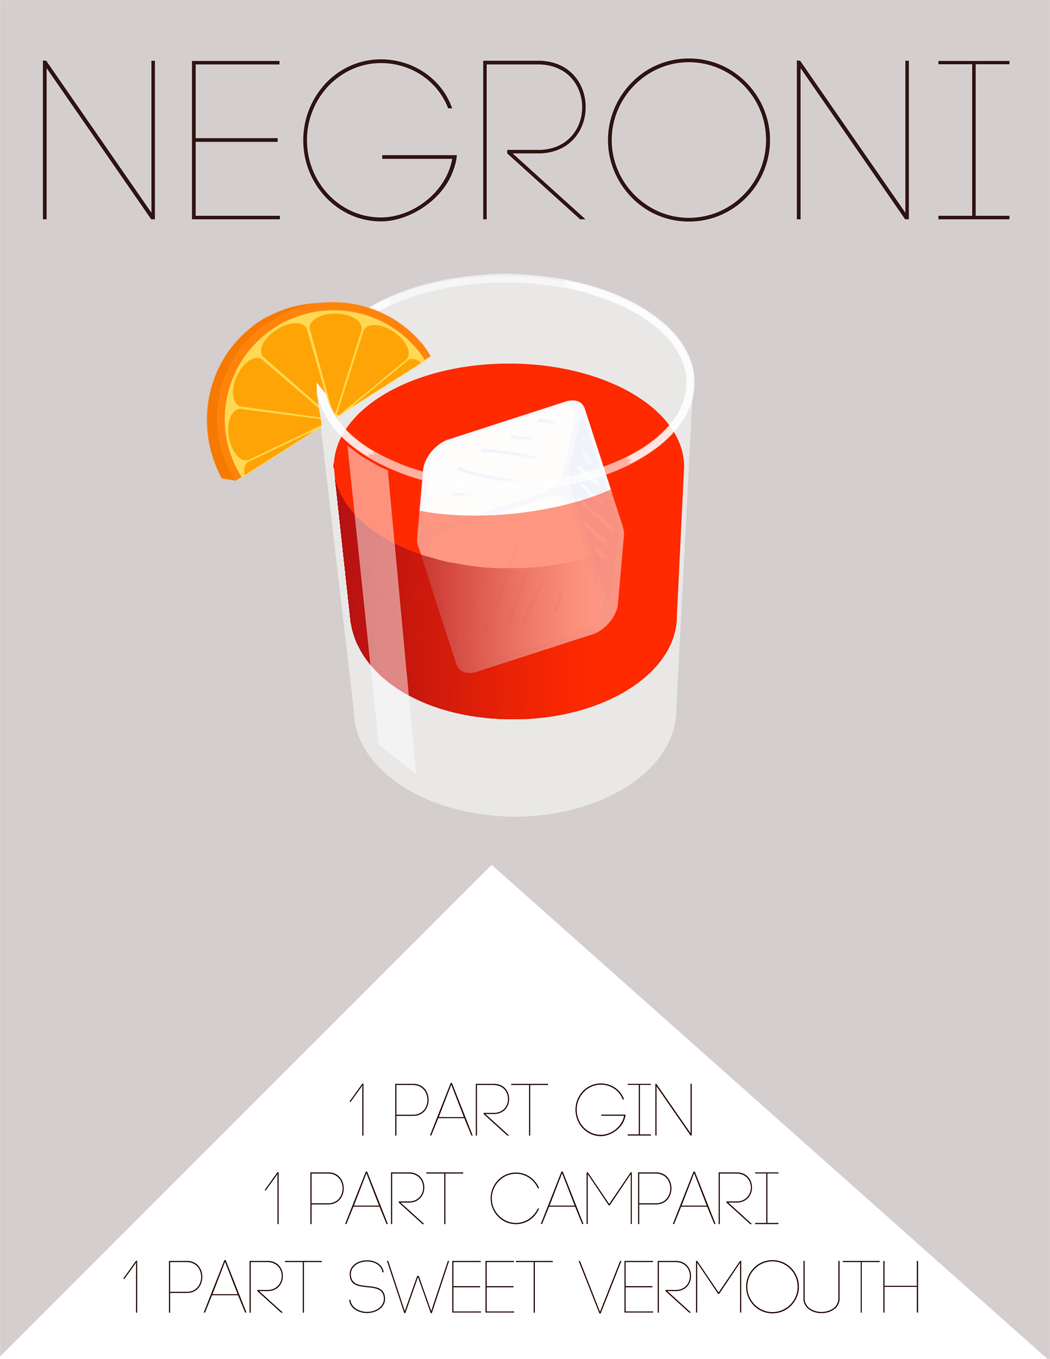 Negroni  Negroni Cocktail  cocktail  Drink Illustration  Cocktail Illustration  Illustration alcohol  mixology